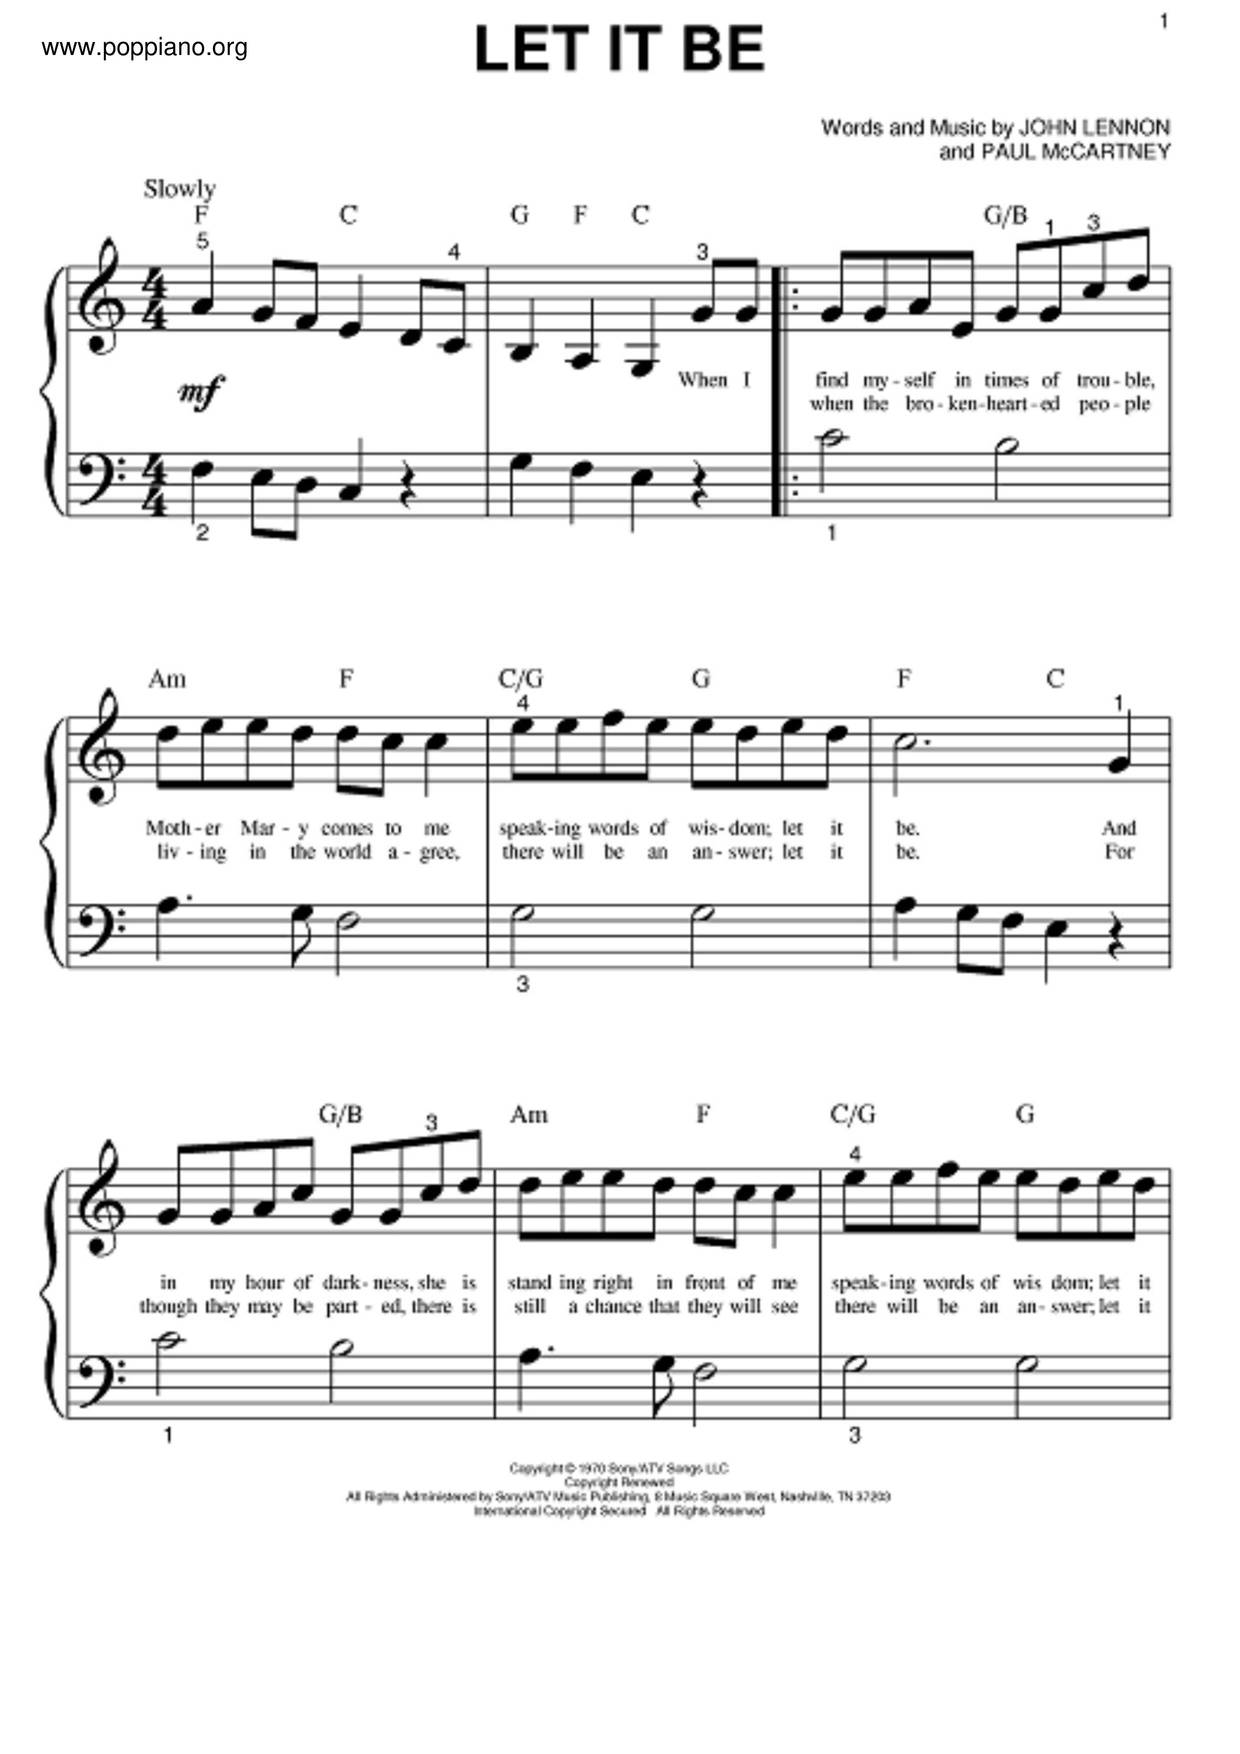 The Beatles-Let It Be Sheet Music pdf, - Free Score Download ★